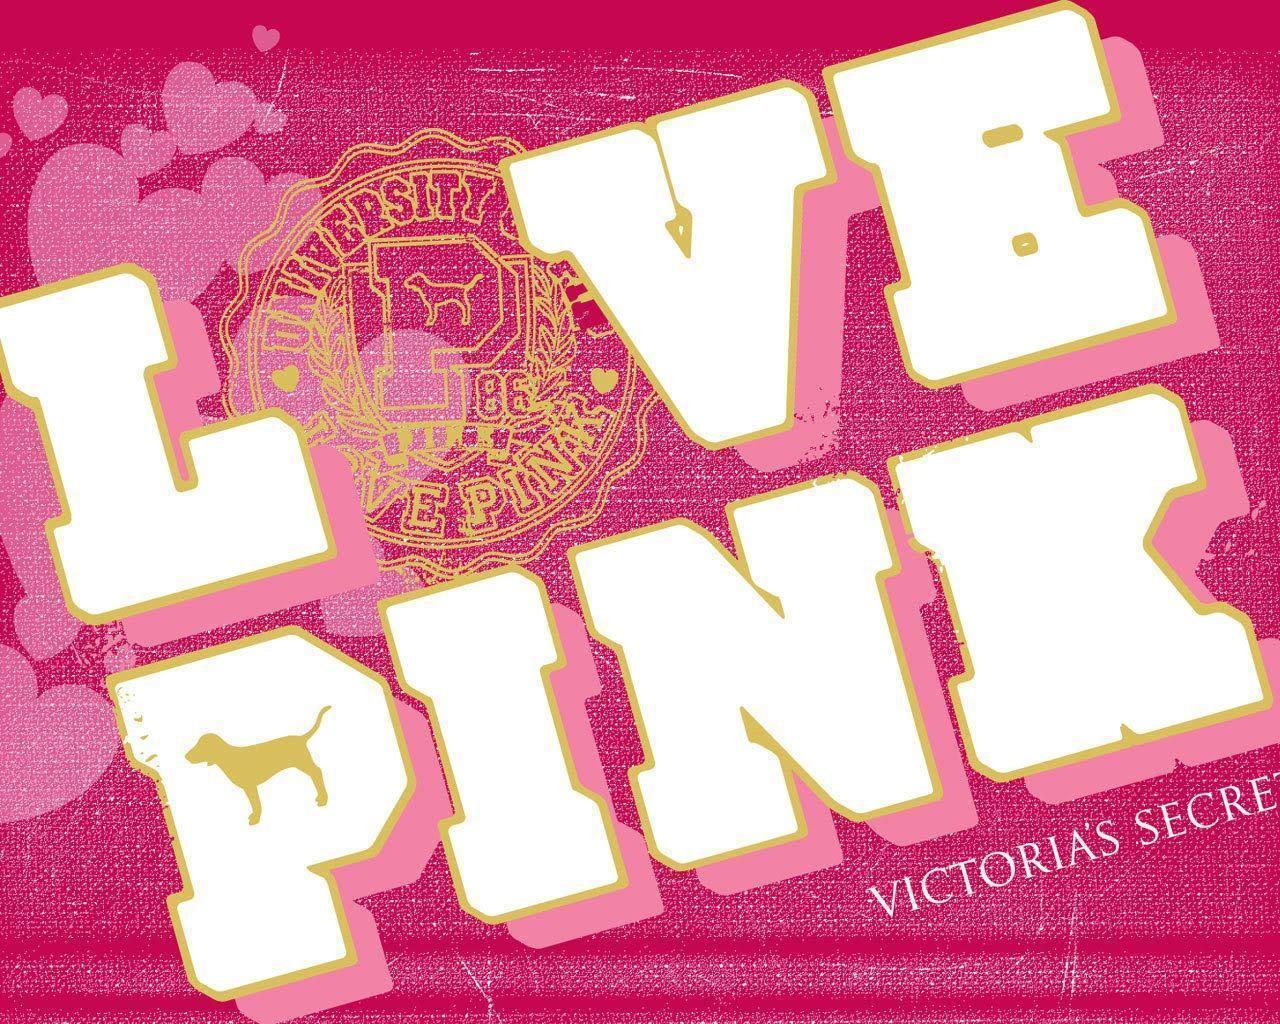 Wonderful 2016 Wallpaper Pack: Love Pink Wallpaper Victoria